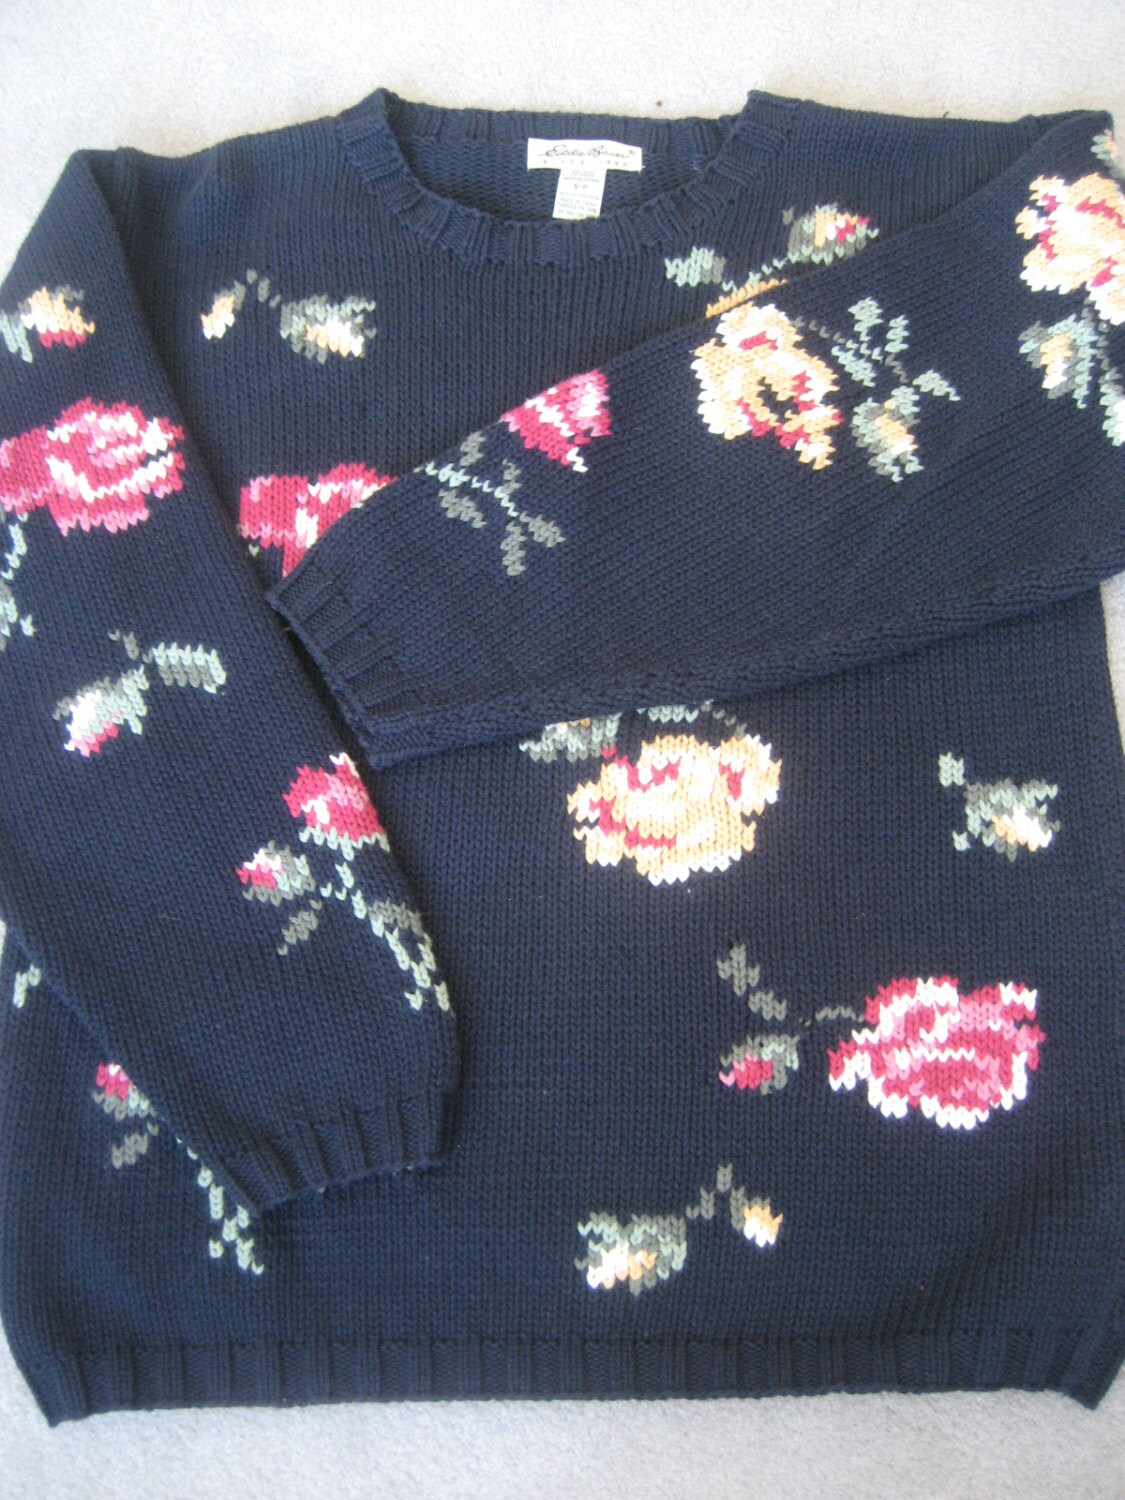 Roses Sweater Jumper 100% Cotton Flowered Eddie by MercyMaud